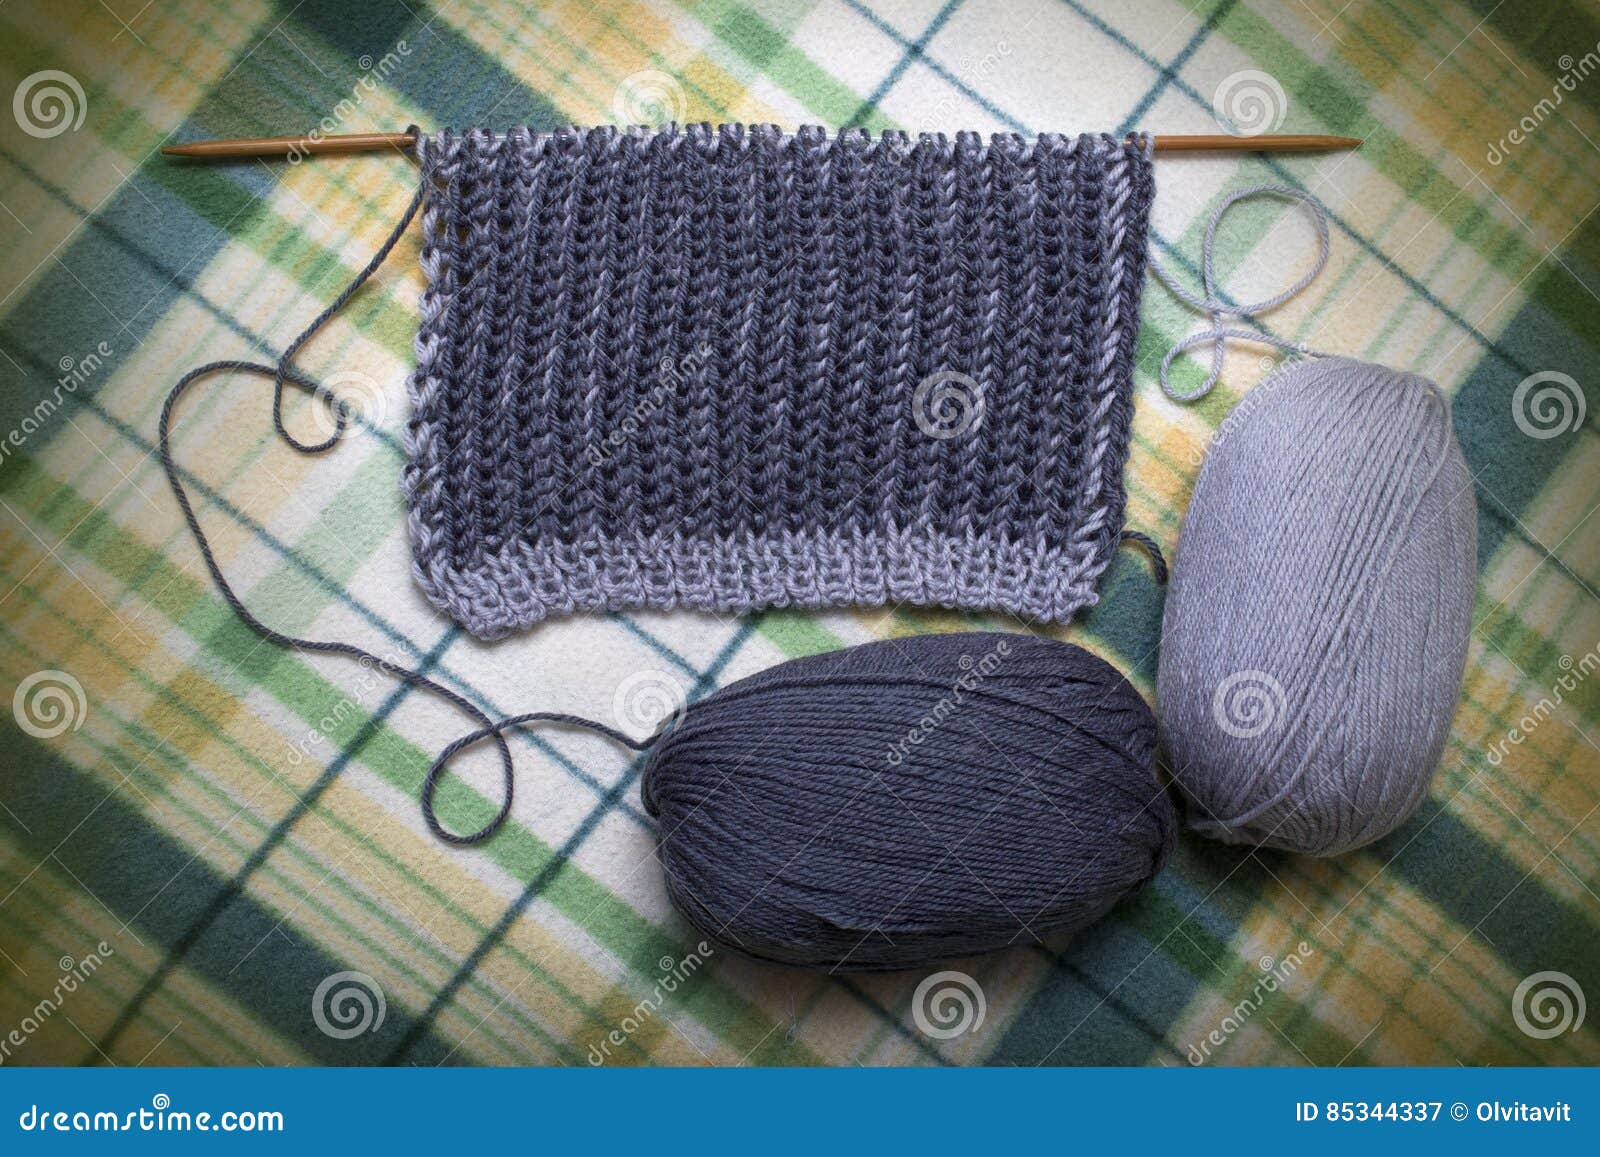 Process of Knitting Yarn Scarf Gray Two-tone English Brioche Stitch ...